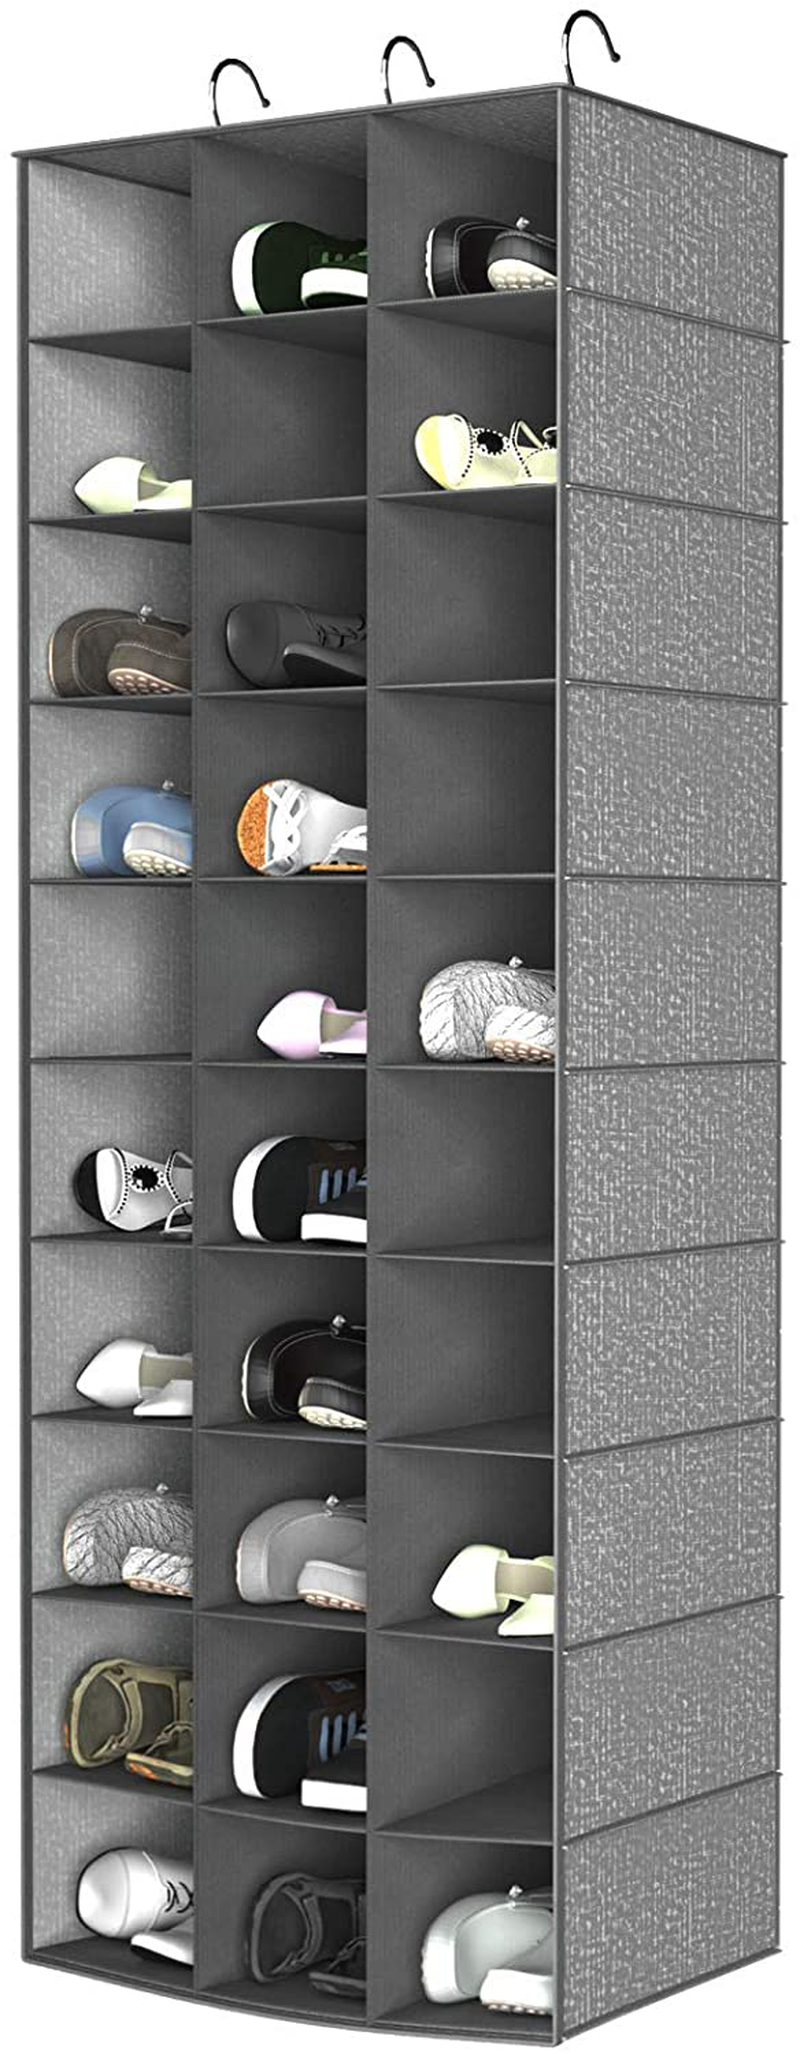 Coastal Rose Hanging Shoe Organizer for Closet, 30 Sections Hanging Closet Organizers and Storage Shelves Space Saving Shoe Rack Holder Hanger, Grey, 17''W×11.5''Dx 48''H